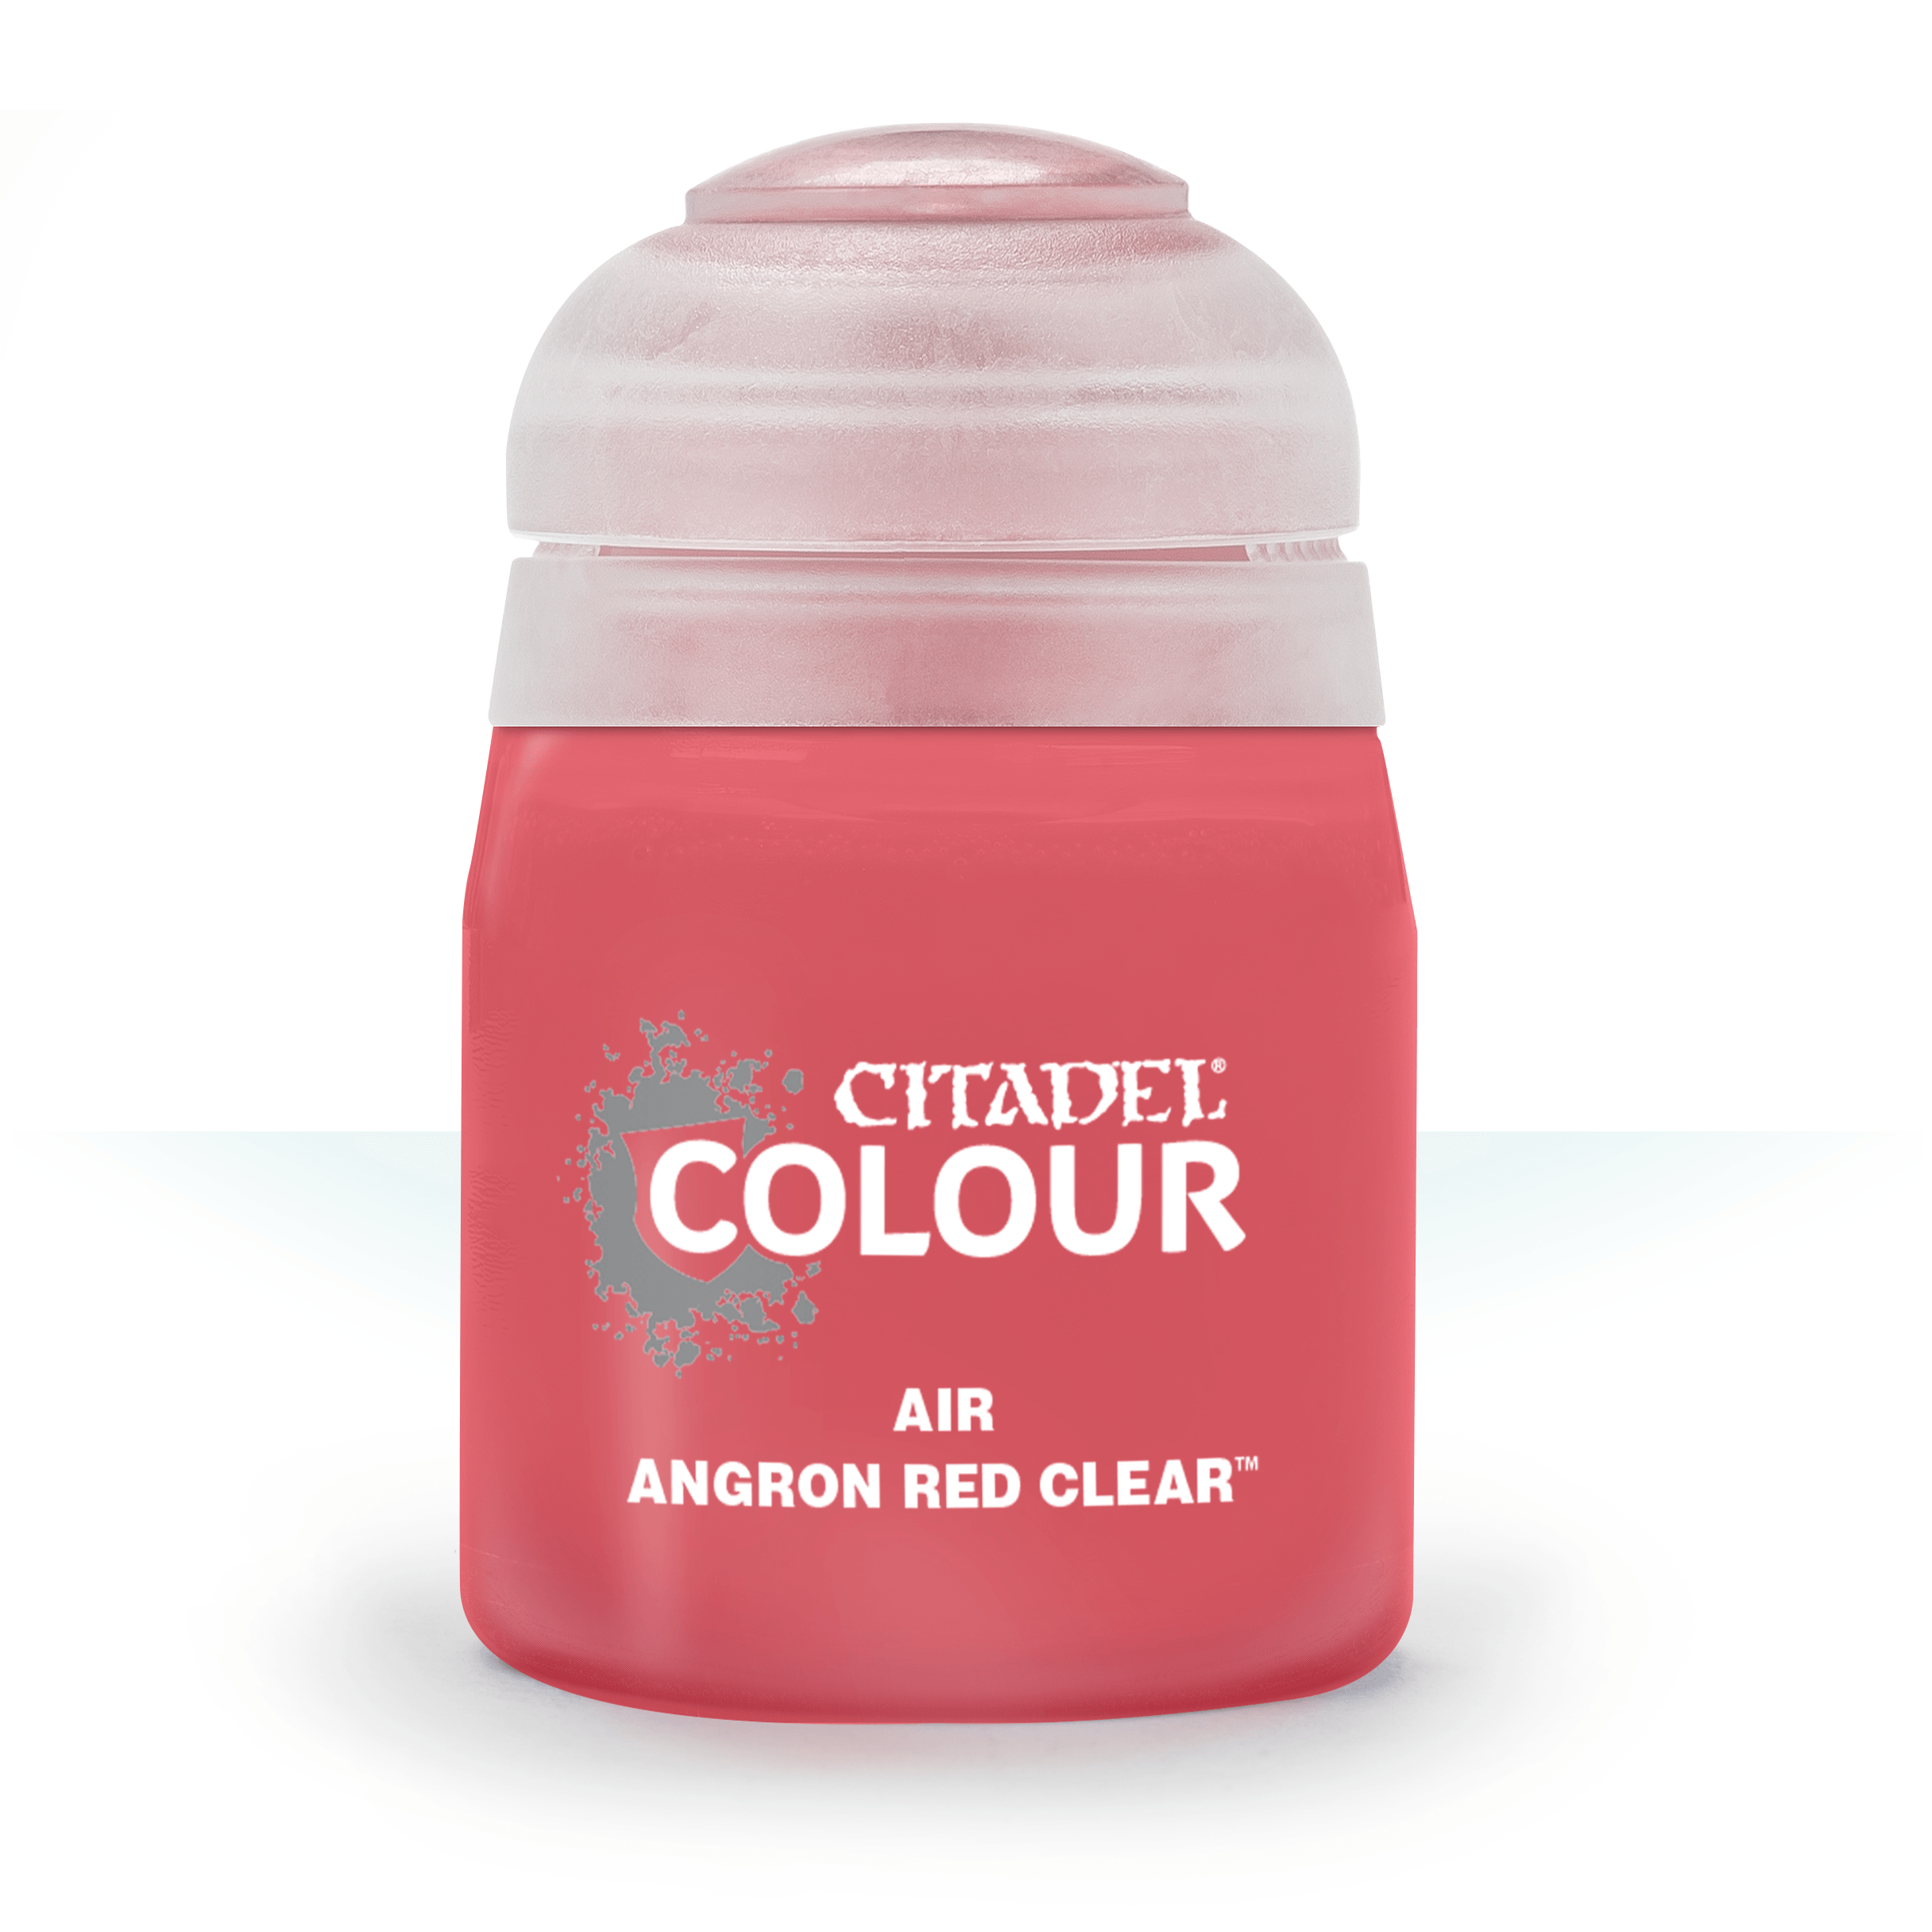 Air Angron Red Clear - Citadel Colour - 24 ml